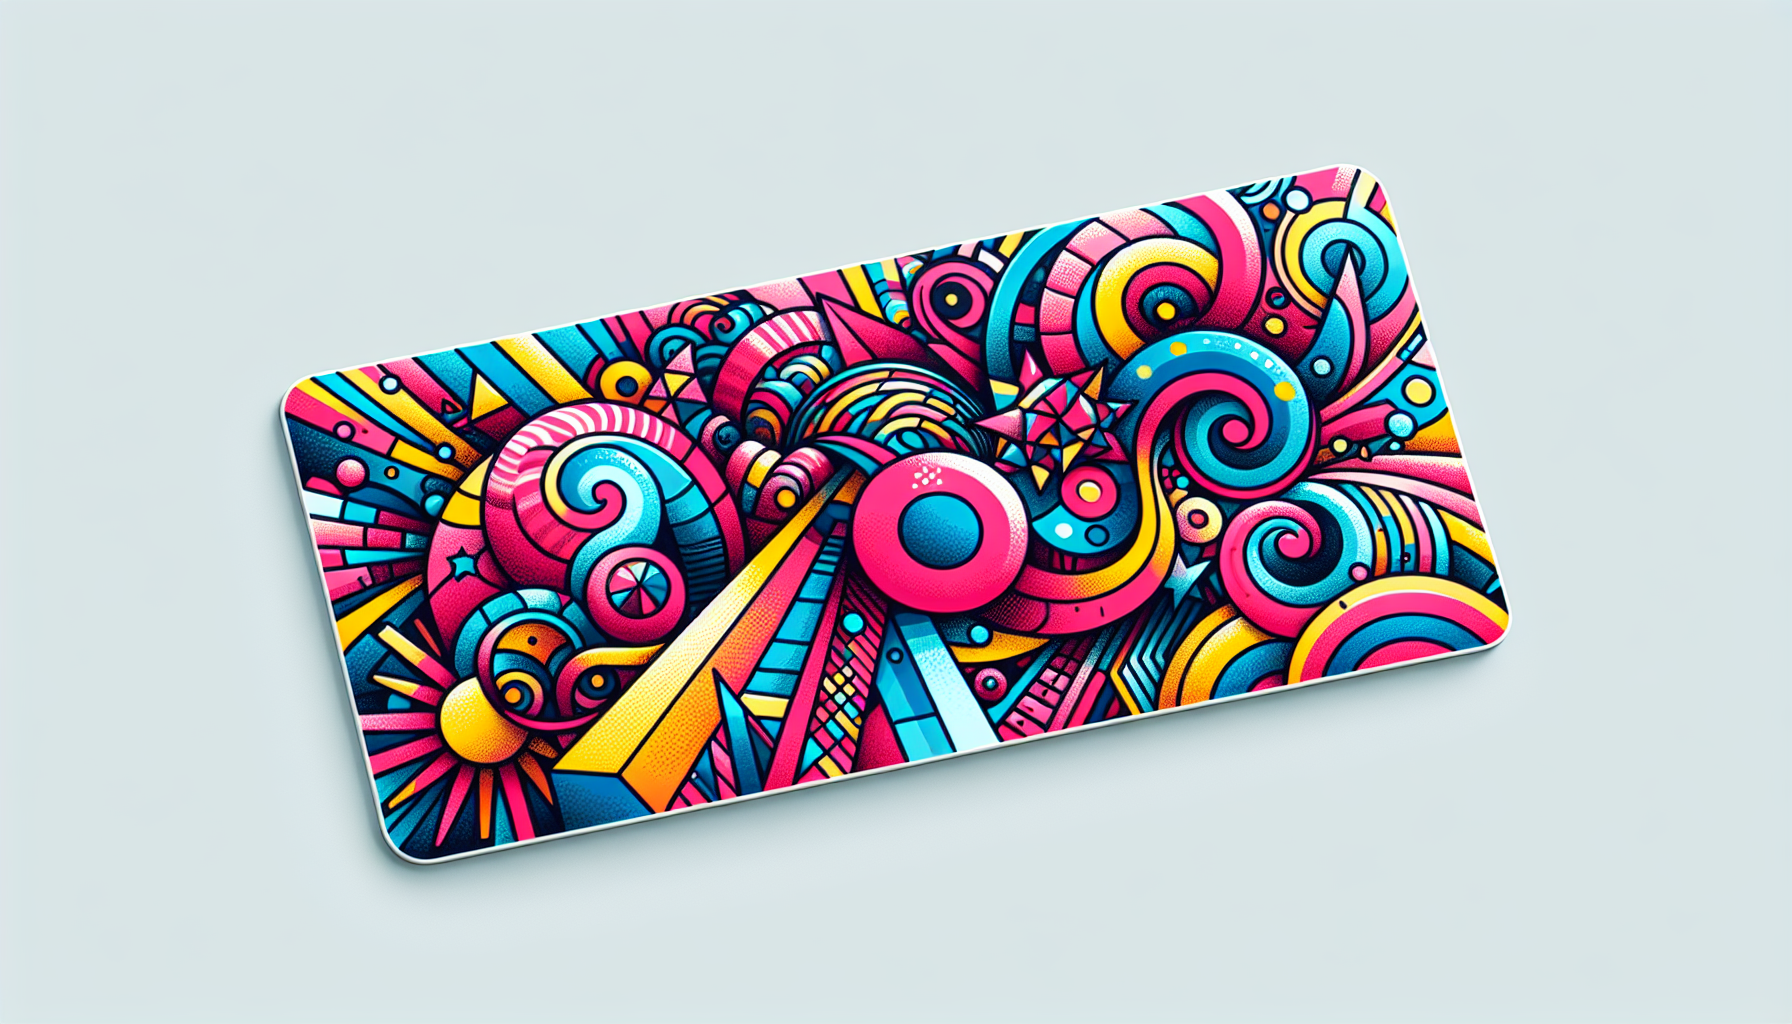 Custom bumper sticker with colorful design